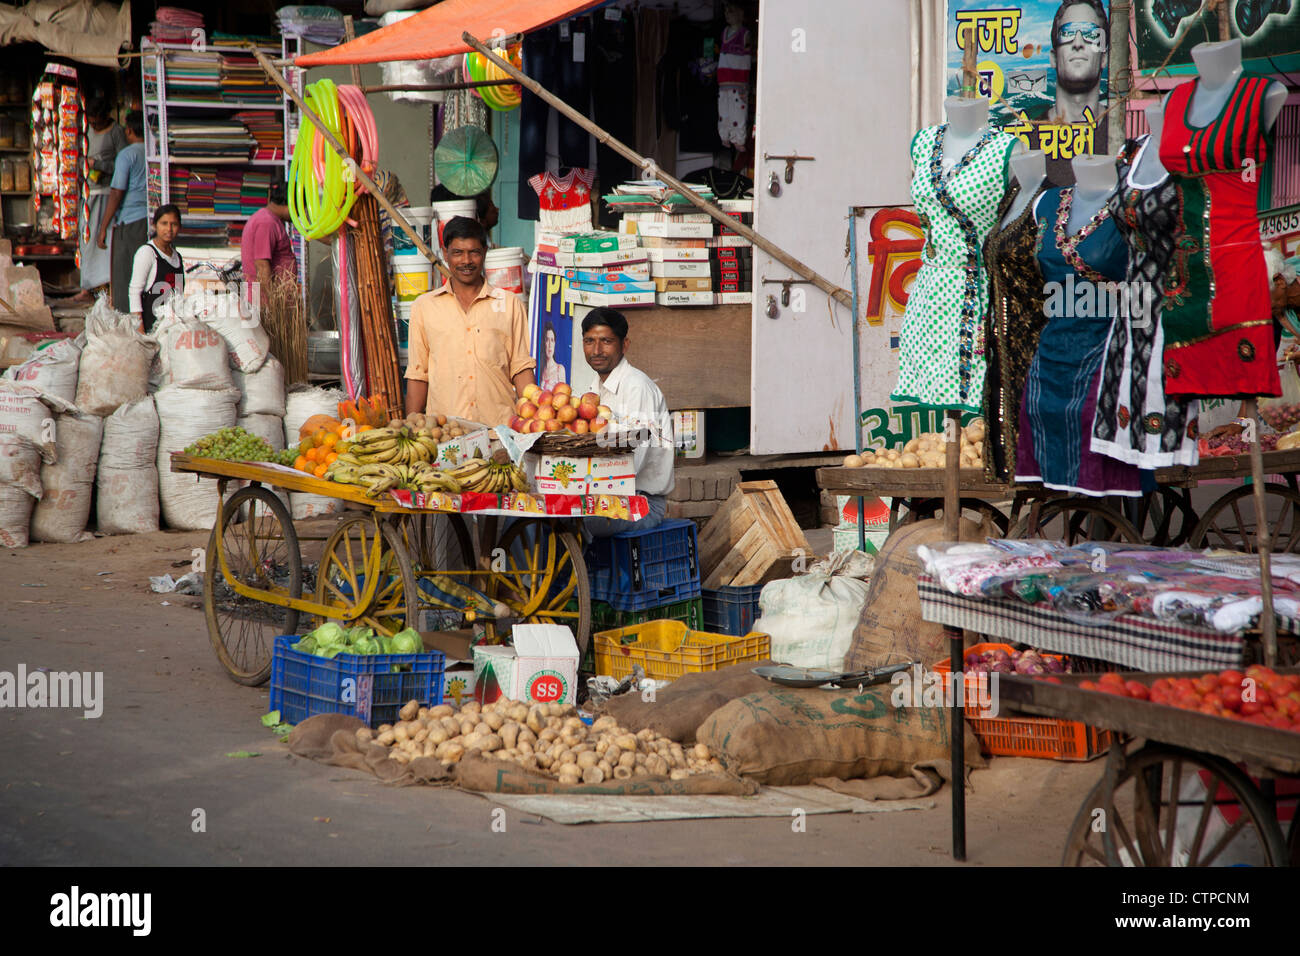 Vendors selling fruit on cart at market in Mathura, Uttar Pradesh, India Stock Photo